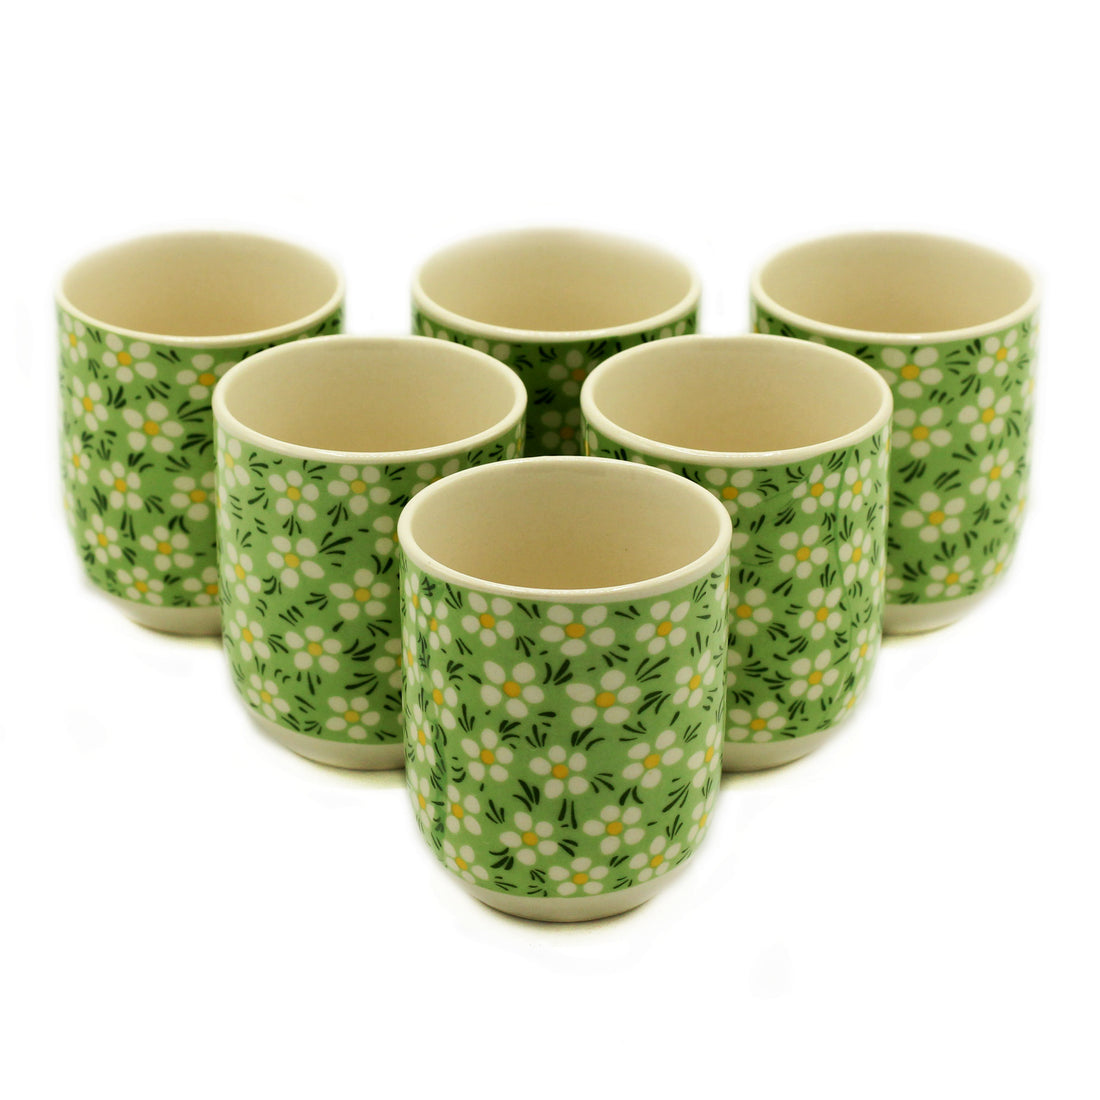 Herbal Tea Cups - Green Daisy